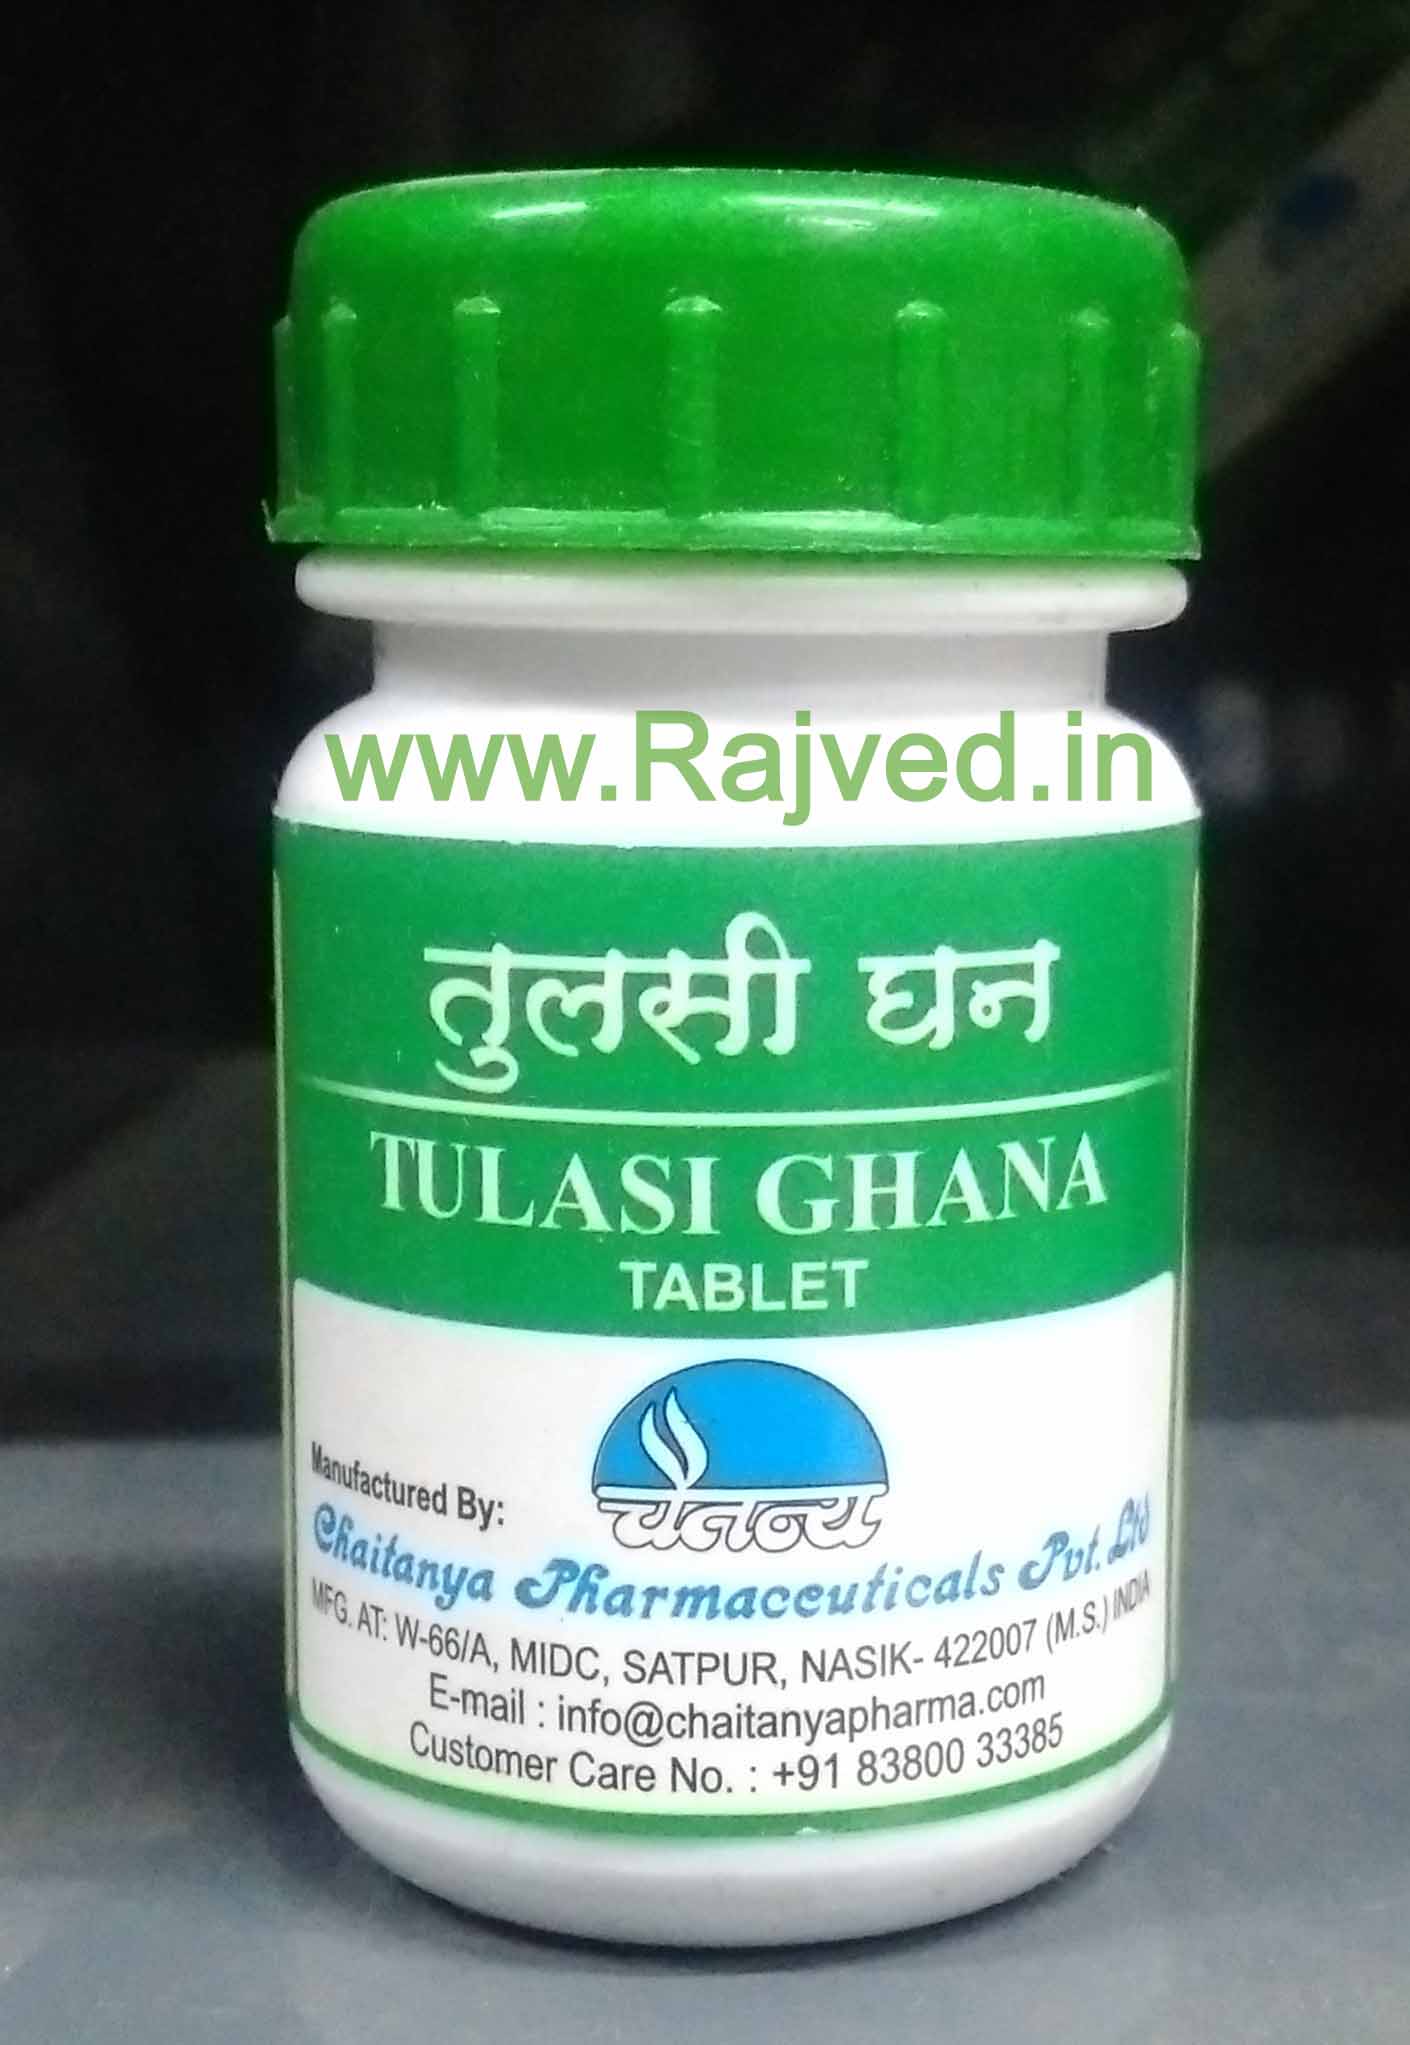 Tulasi ghana 2000 tab upto 20% off free shipping chaitanya pharmaceuticals